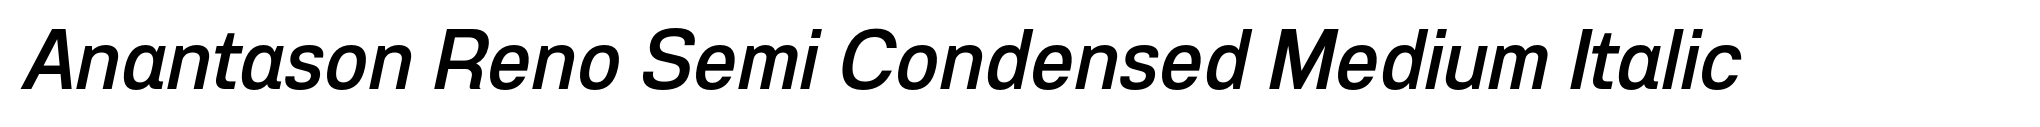 Anantason Reno Semi Condensed Medium Italic image